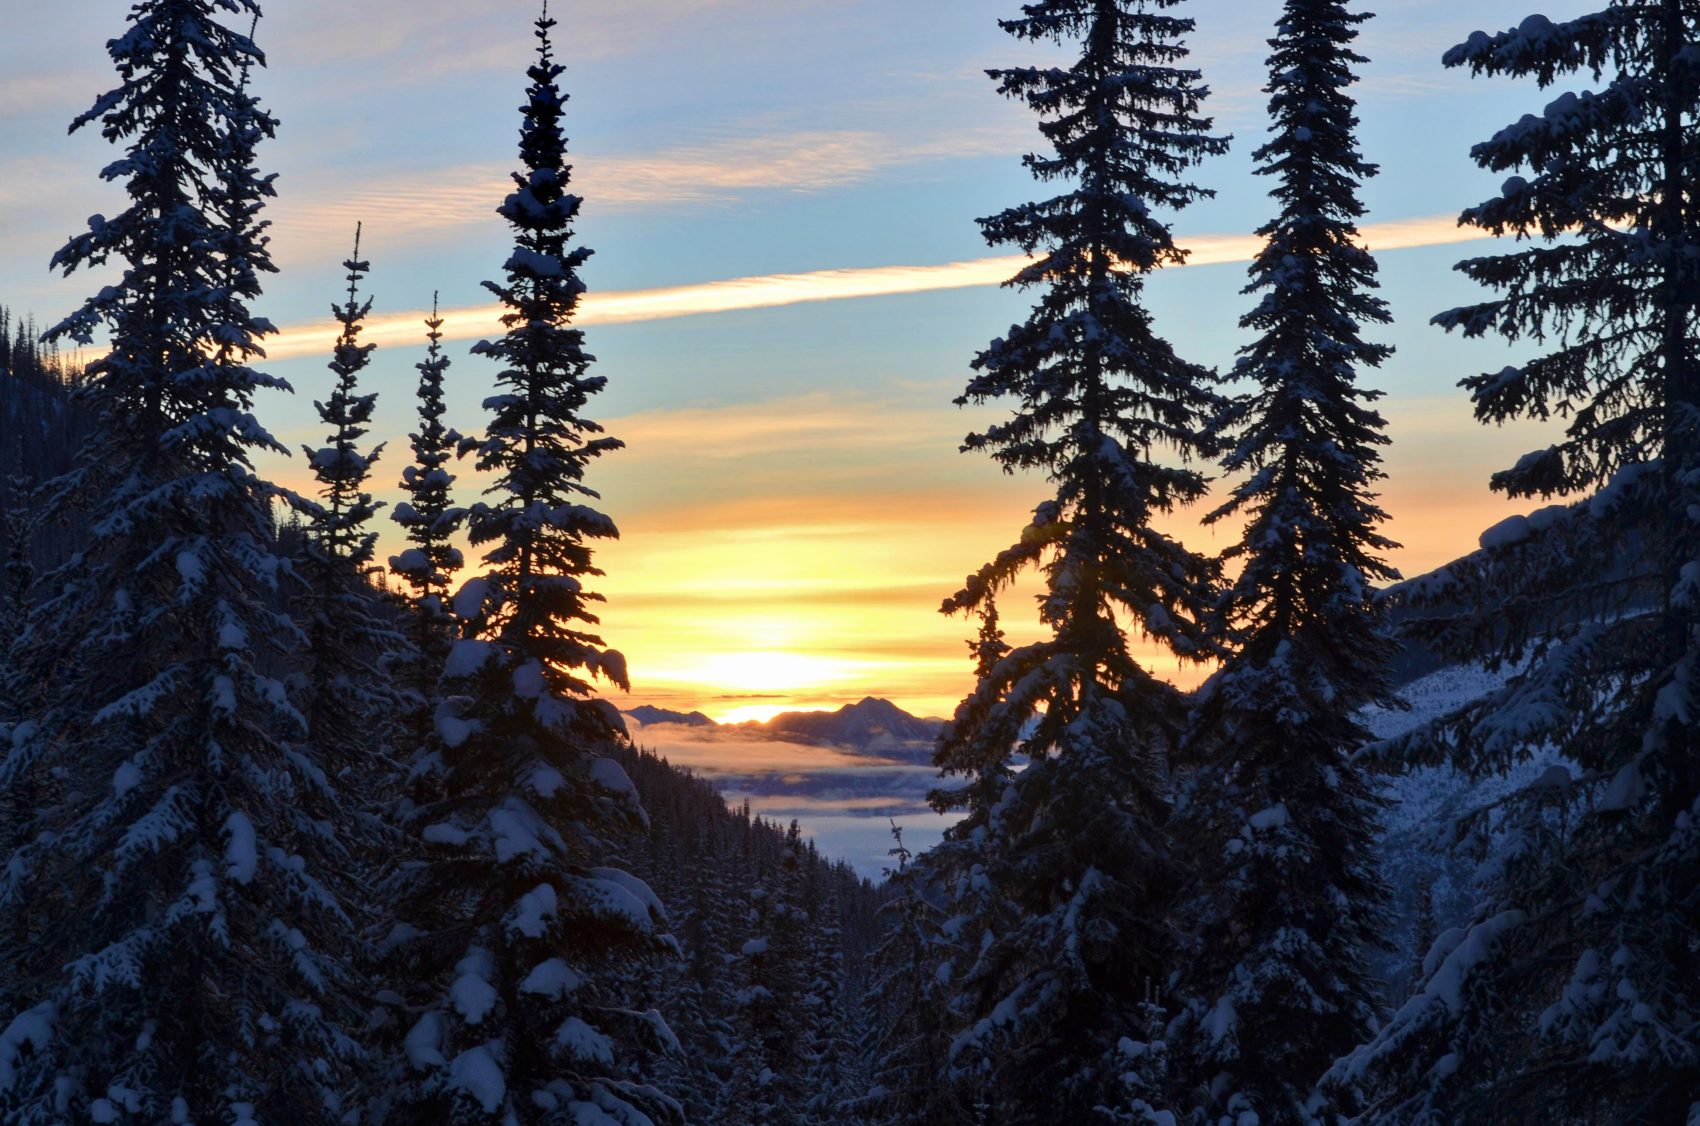 Idaho Peak at sunrise